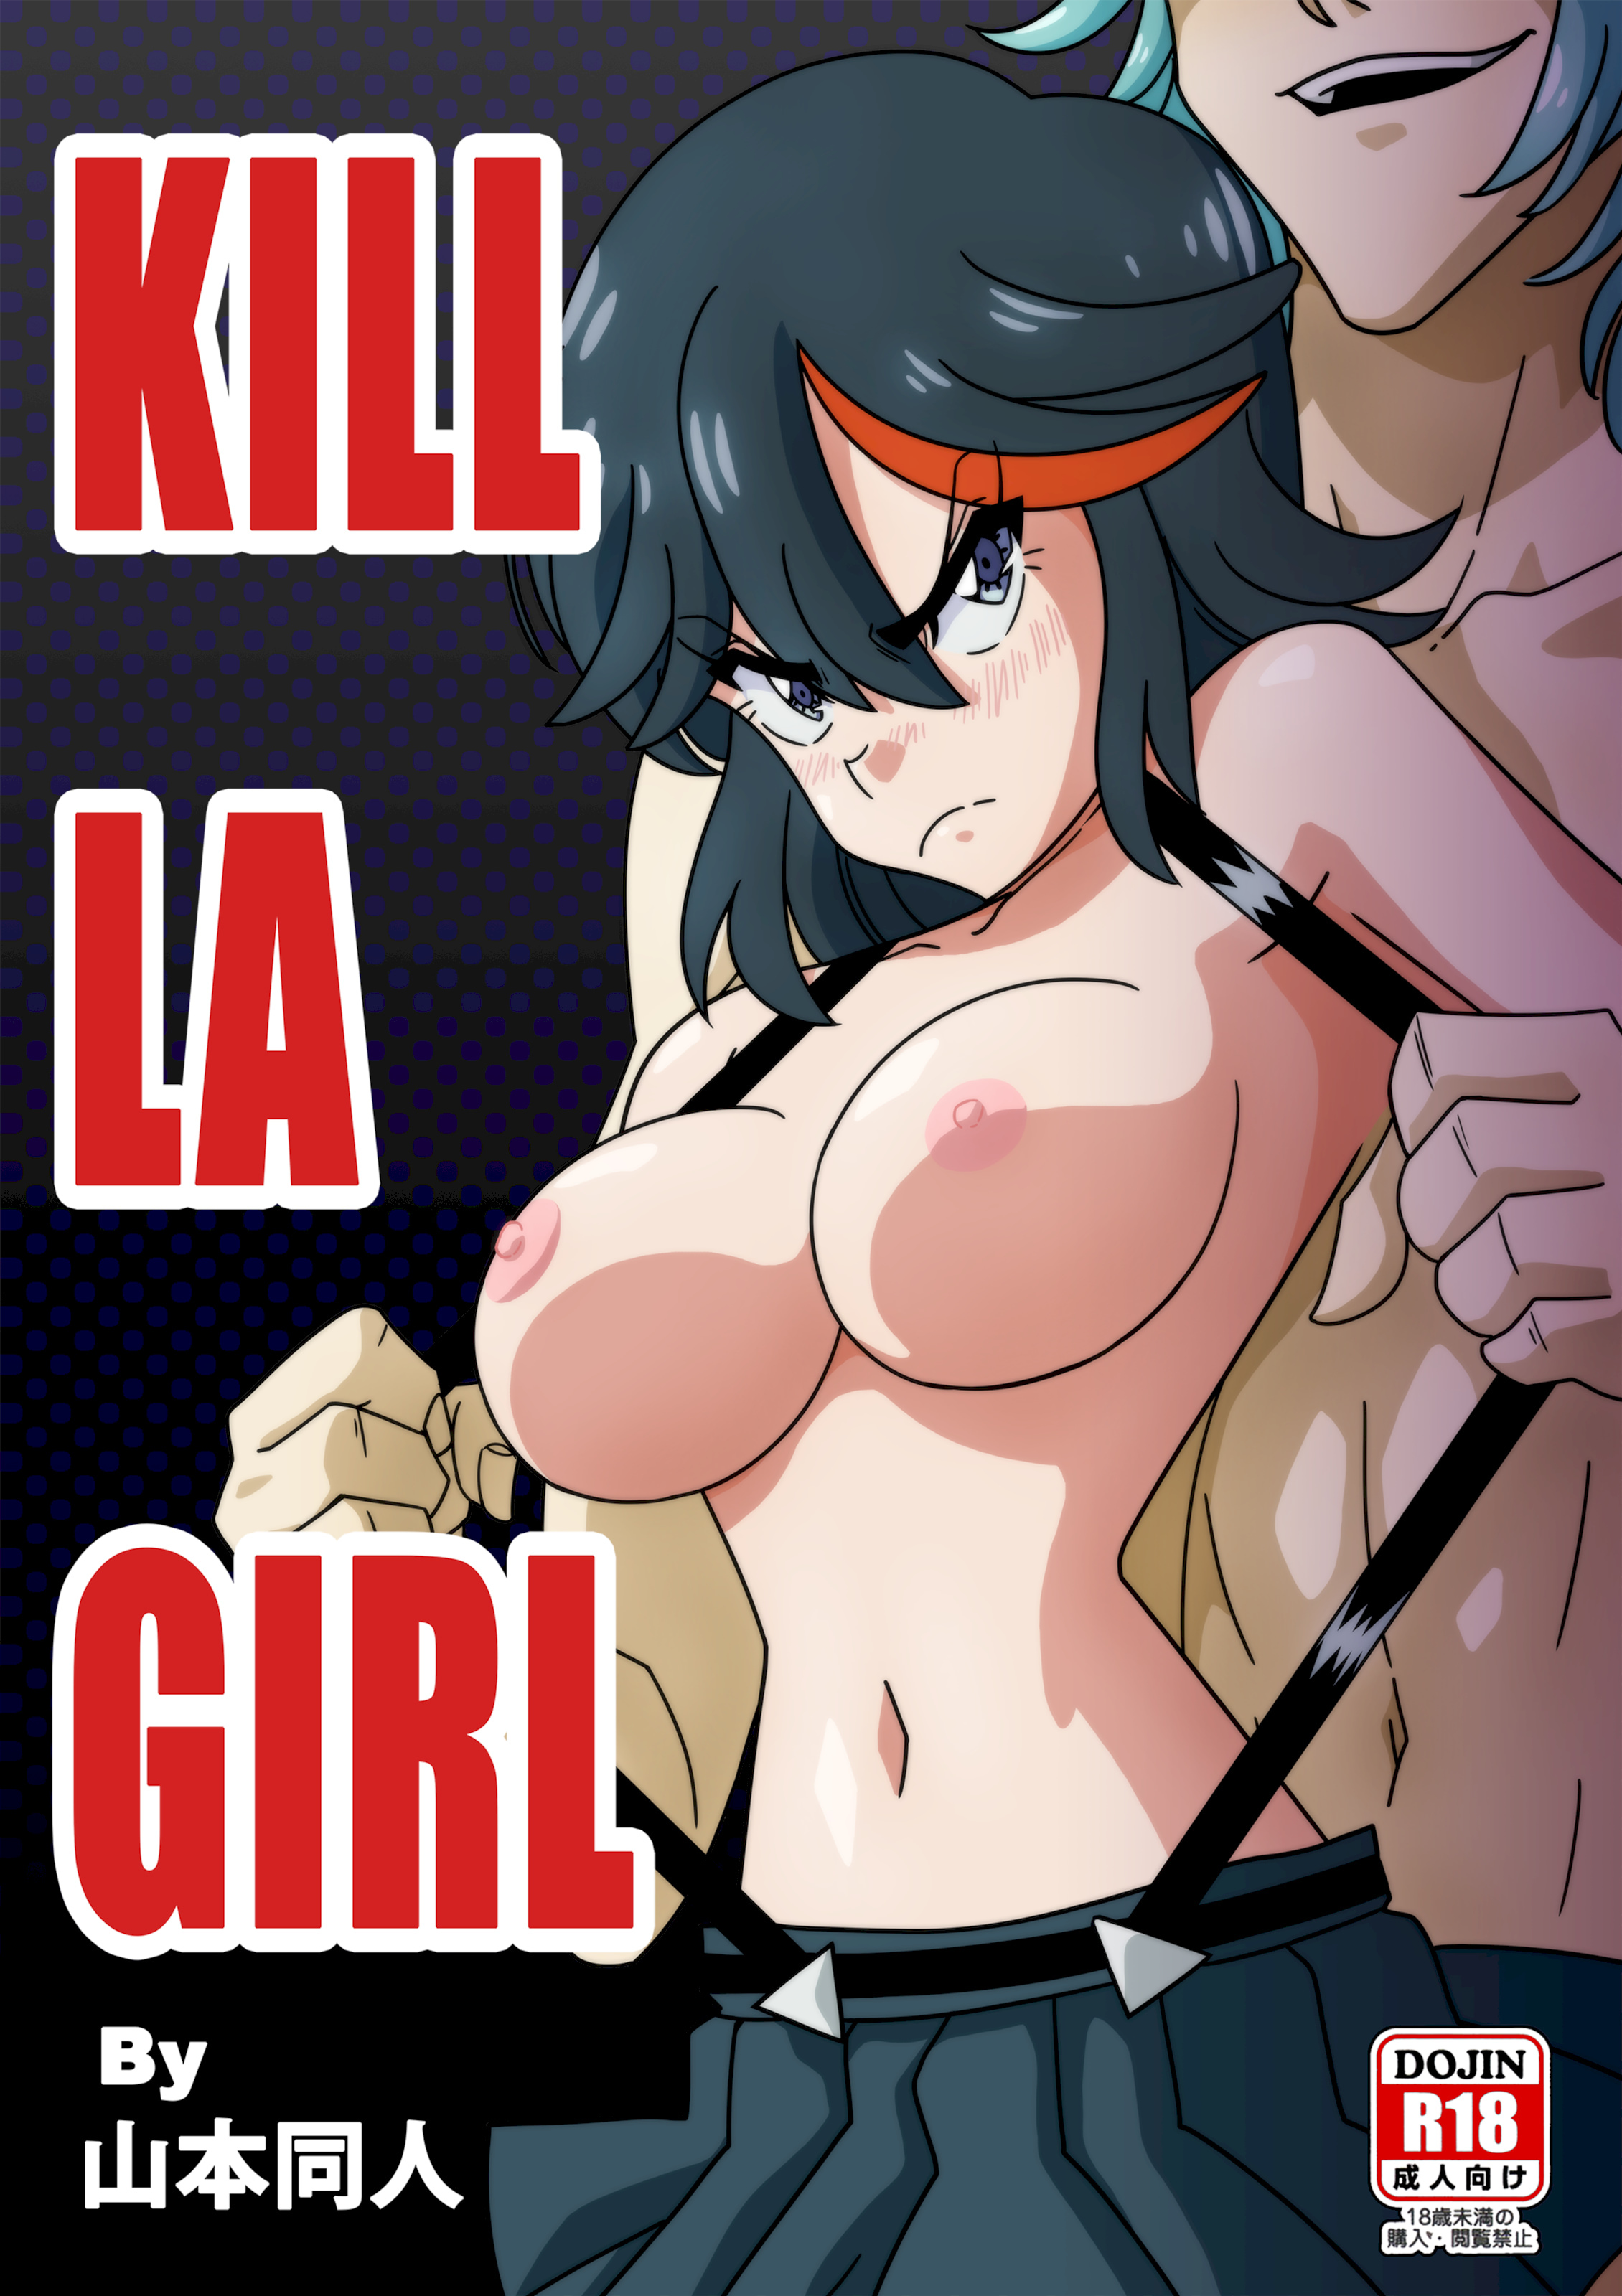 Free Kill La Kill Hentai - Kill La Kill - Hentai Manga, Doujins, XXX & Anime Porn